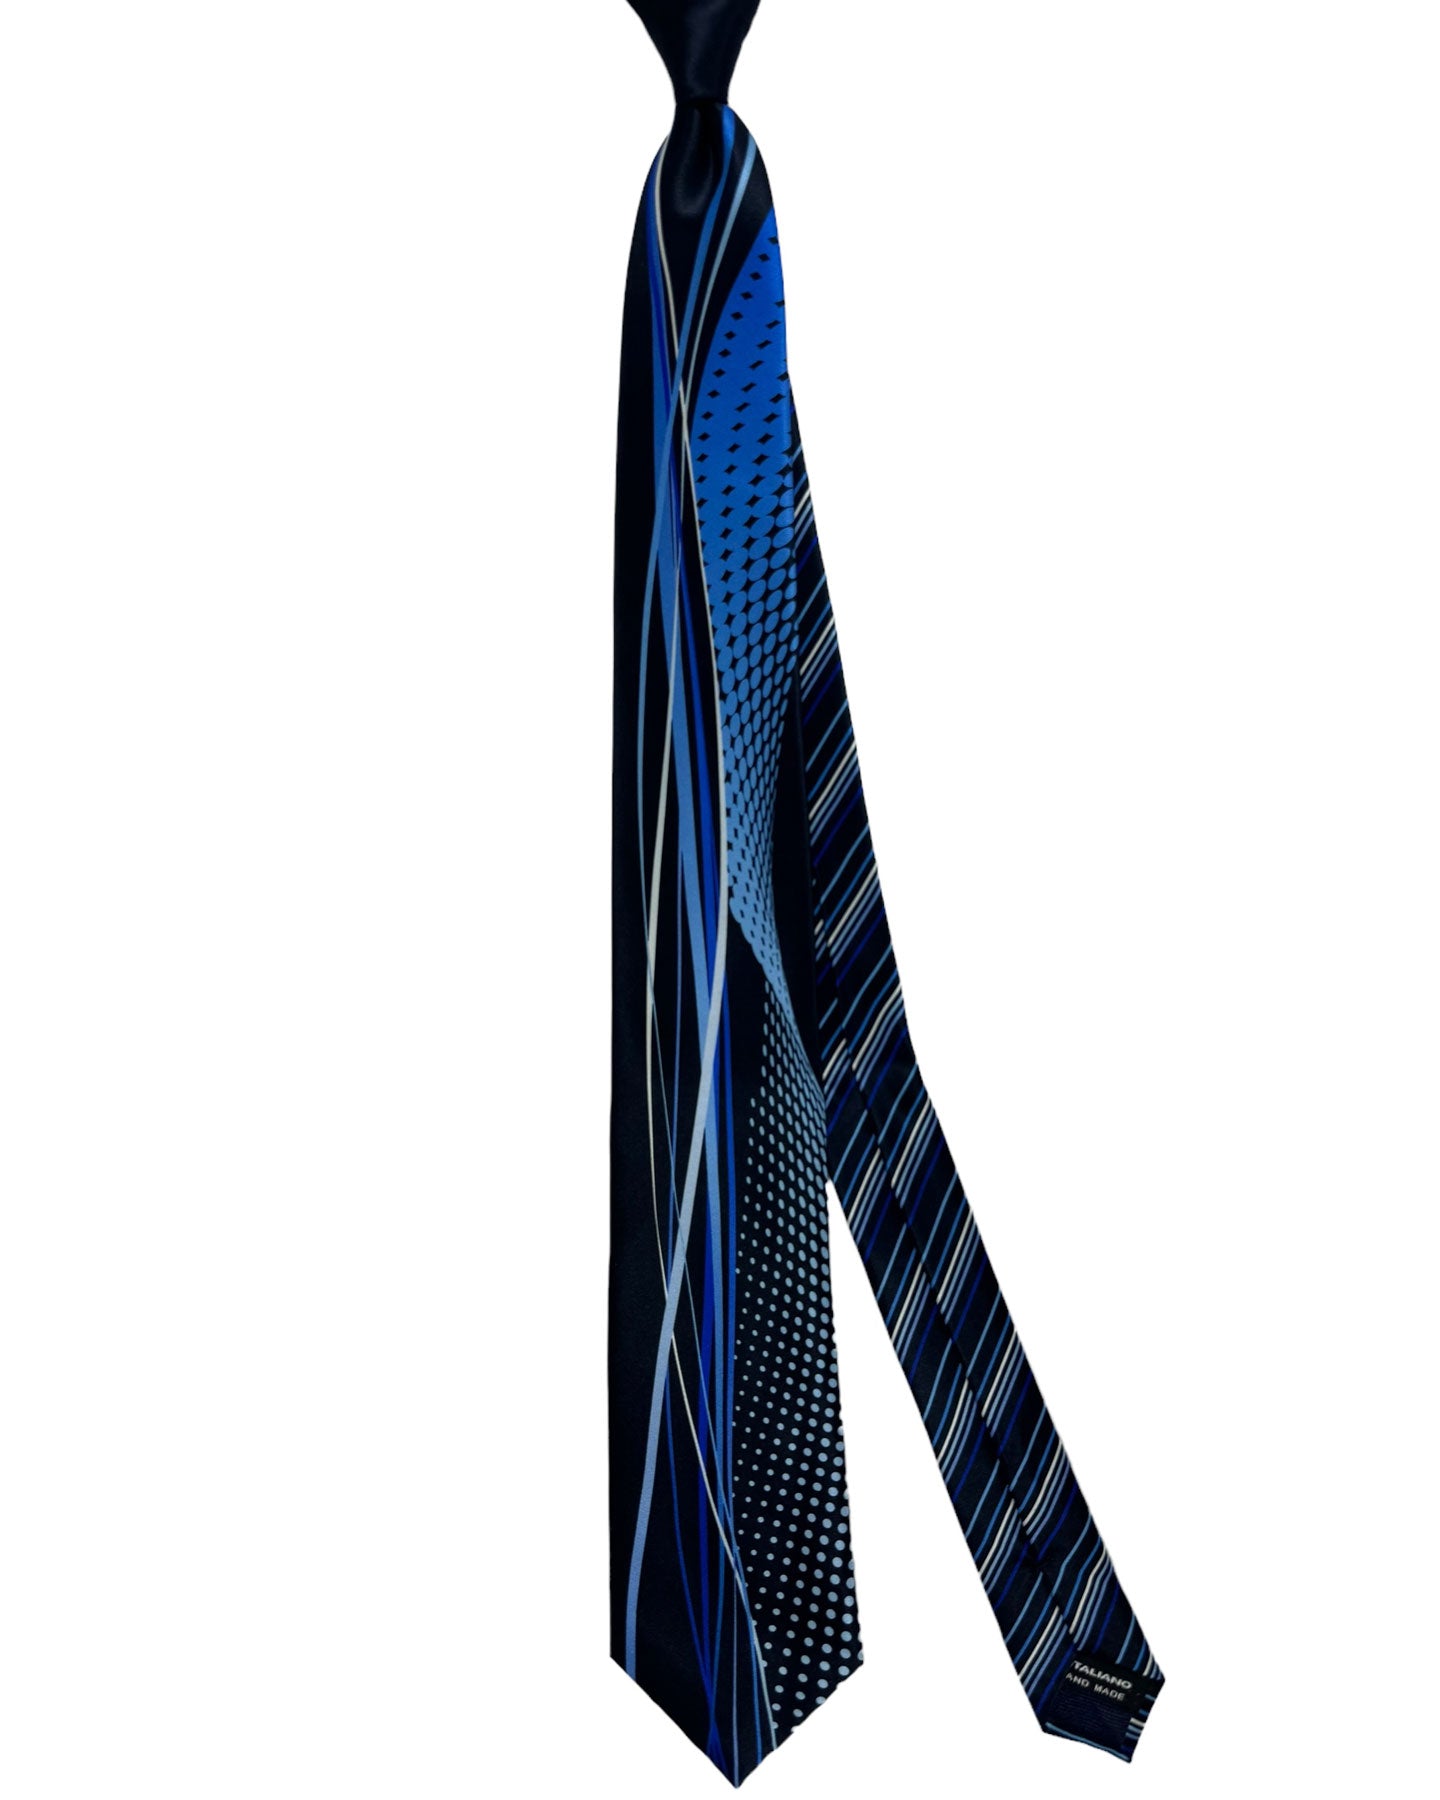 Vitaliano Pancaldi Silk Tie Black Blue Royal Blue Dots Swirl Design